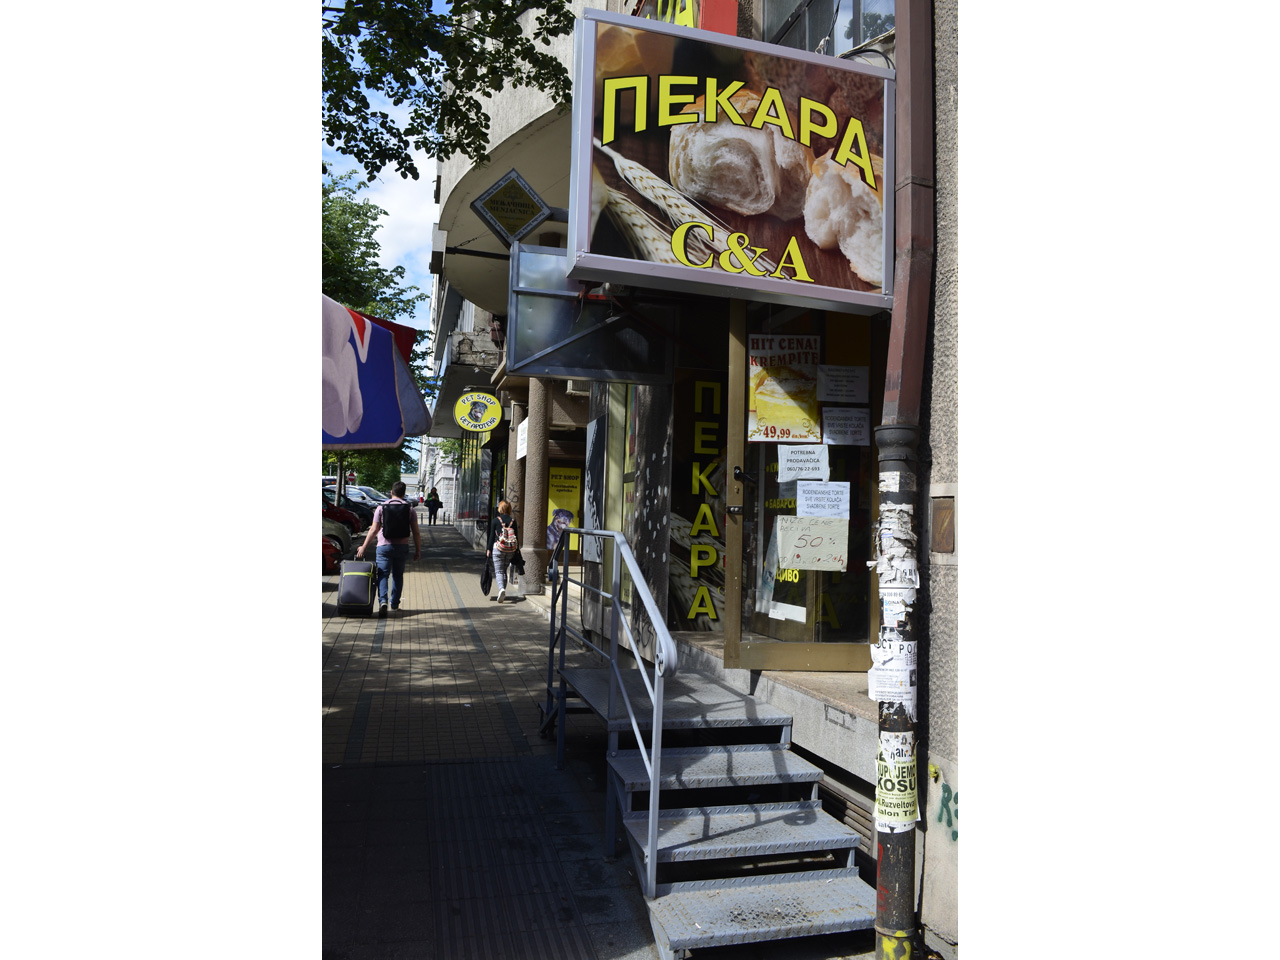 PEKARA S&A Pekare Beograd